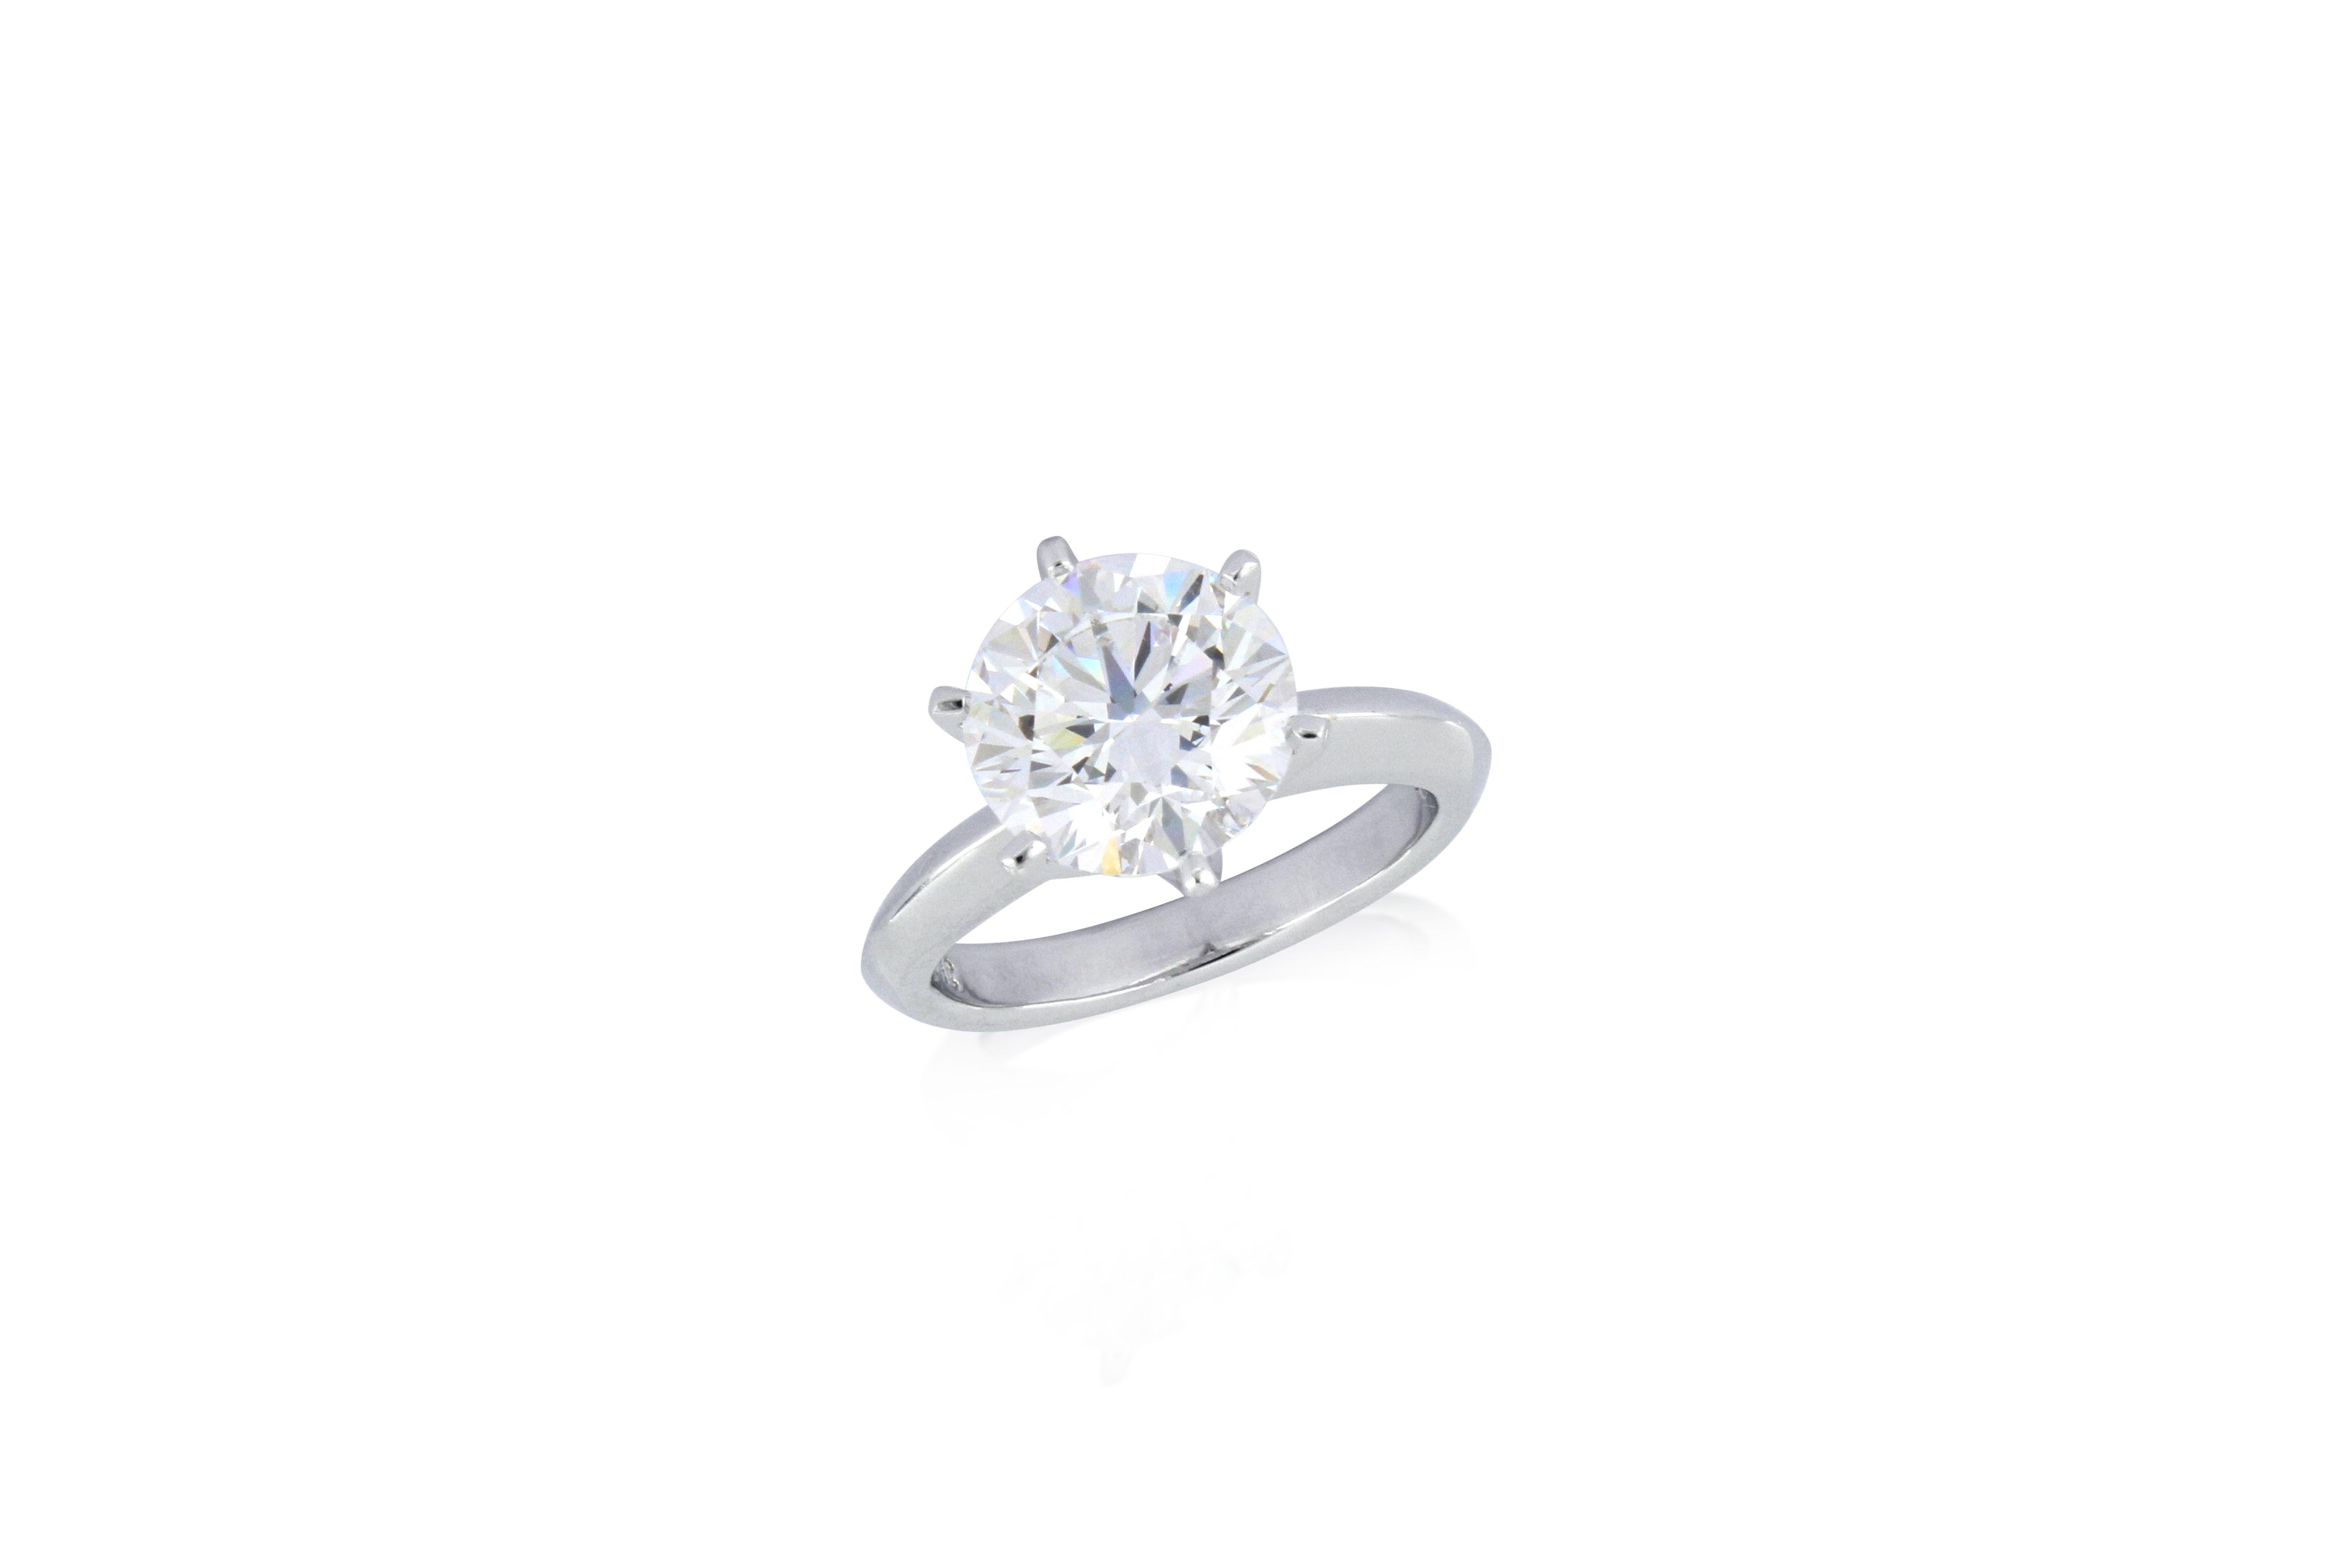 Women's 3.52 Carat Natural Diamond Ring in 18K White Gold For Sale